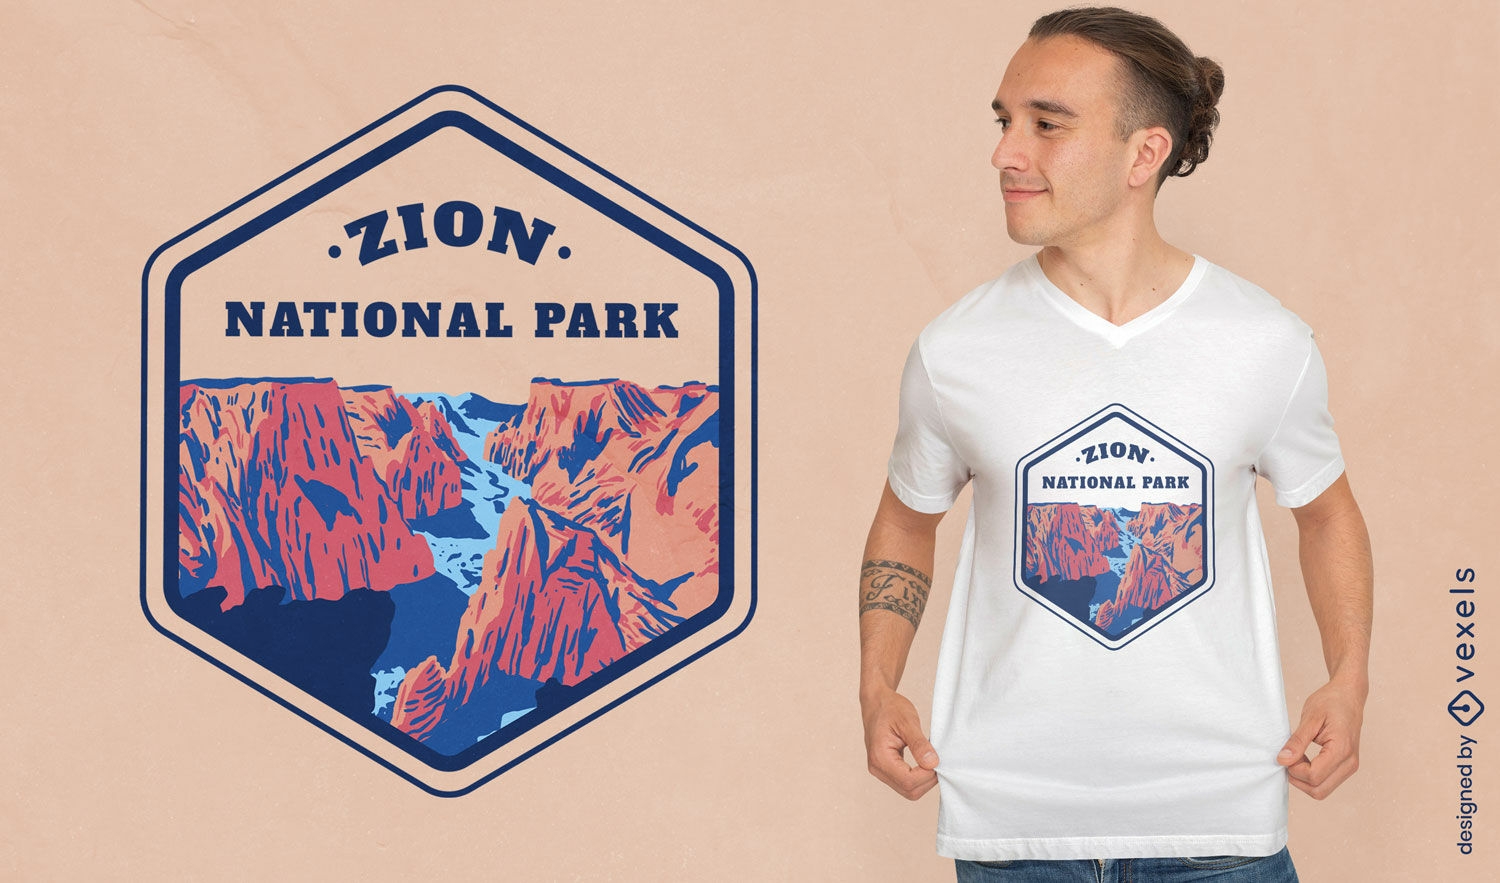 Landschafts-T-Shirt-Design des Zion-Nationalparks